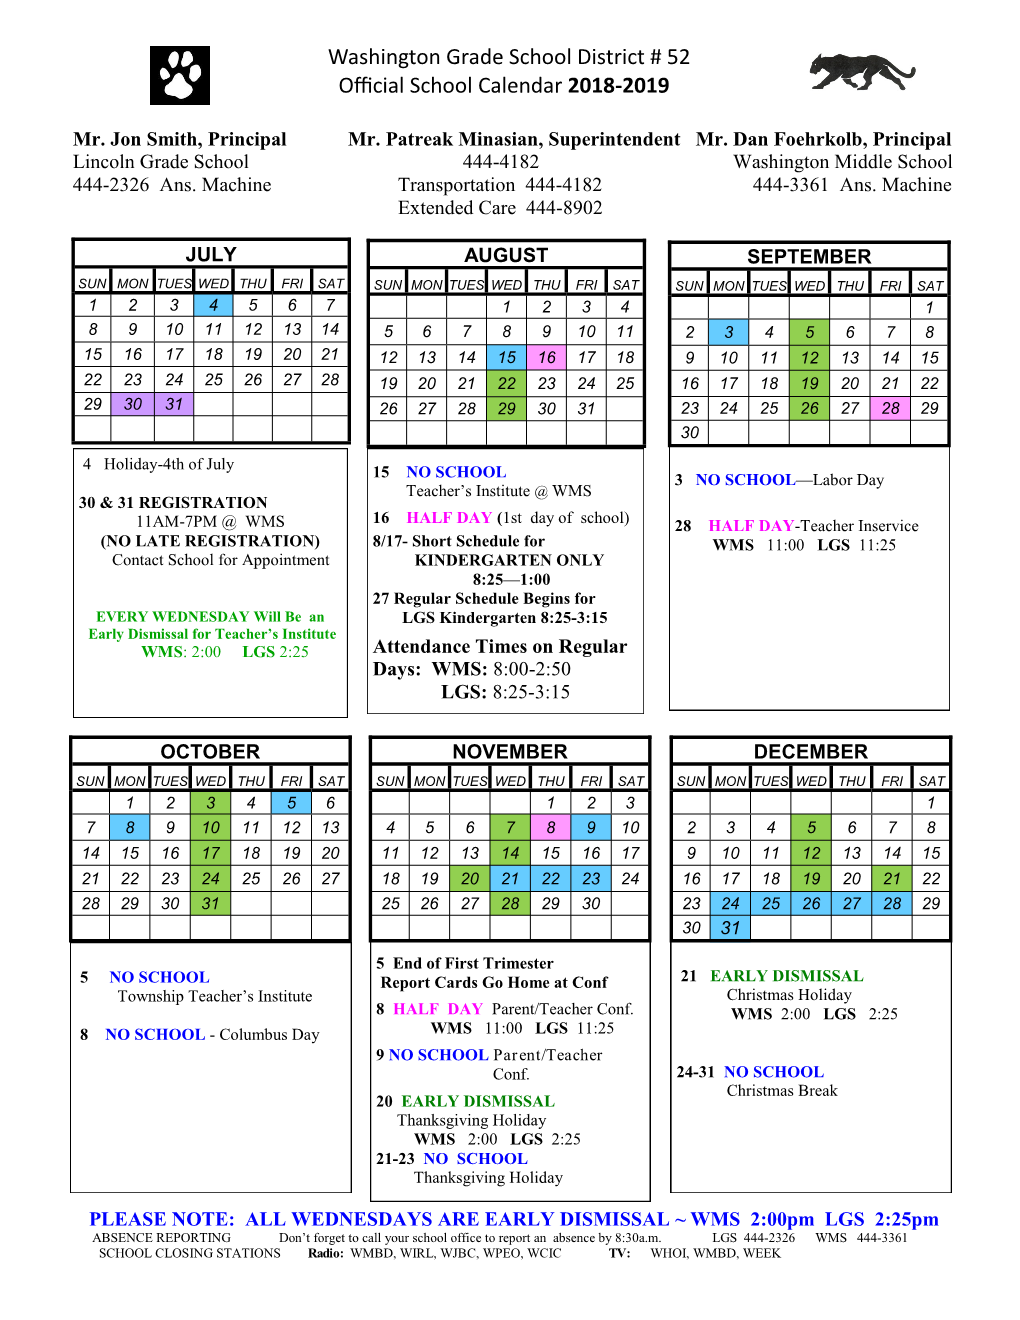 Washington Grade School District # 52 Official School Calendar 2018-2019